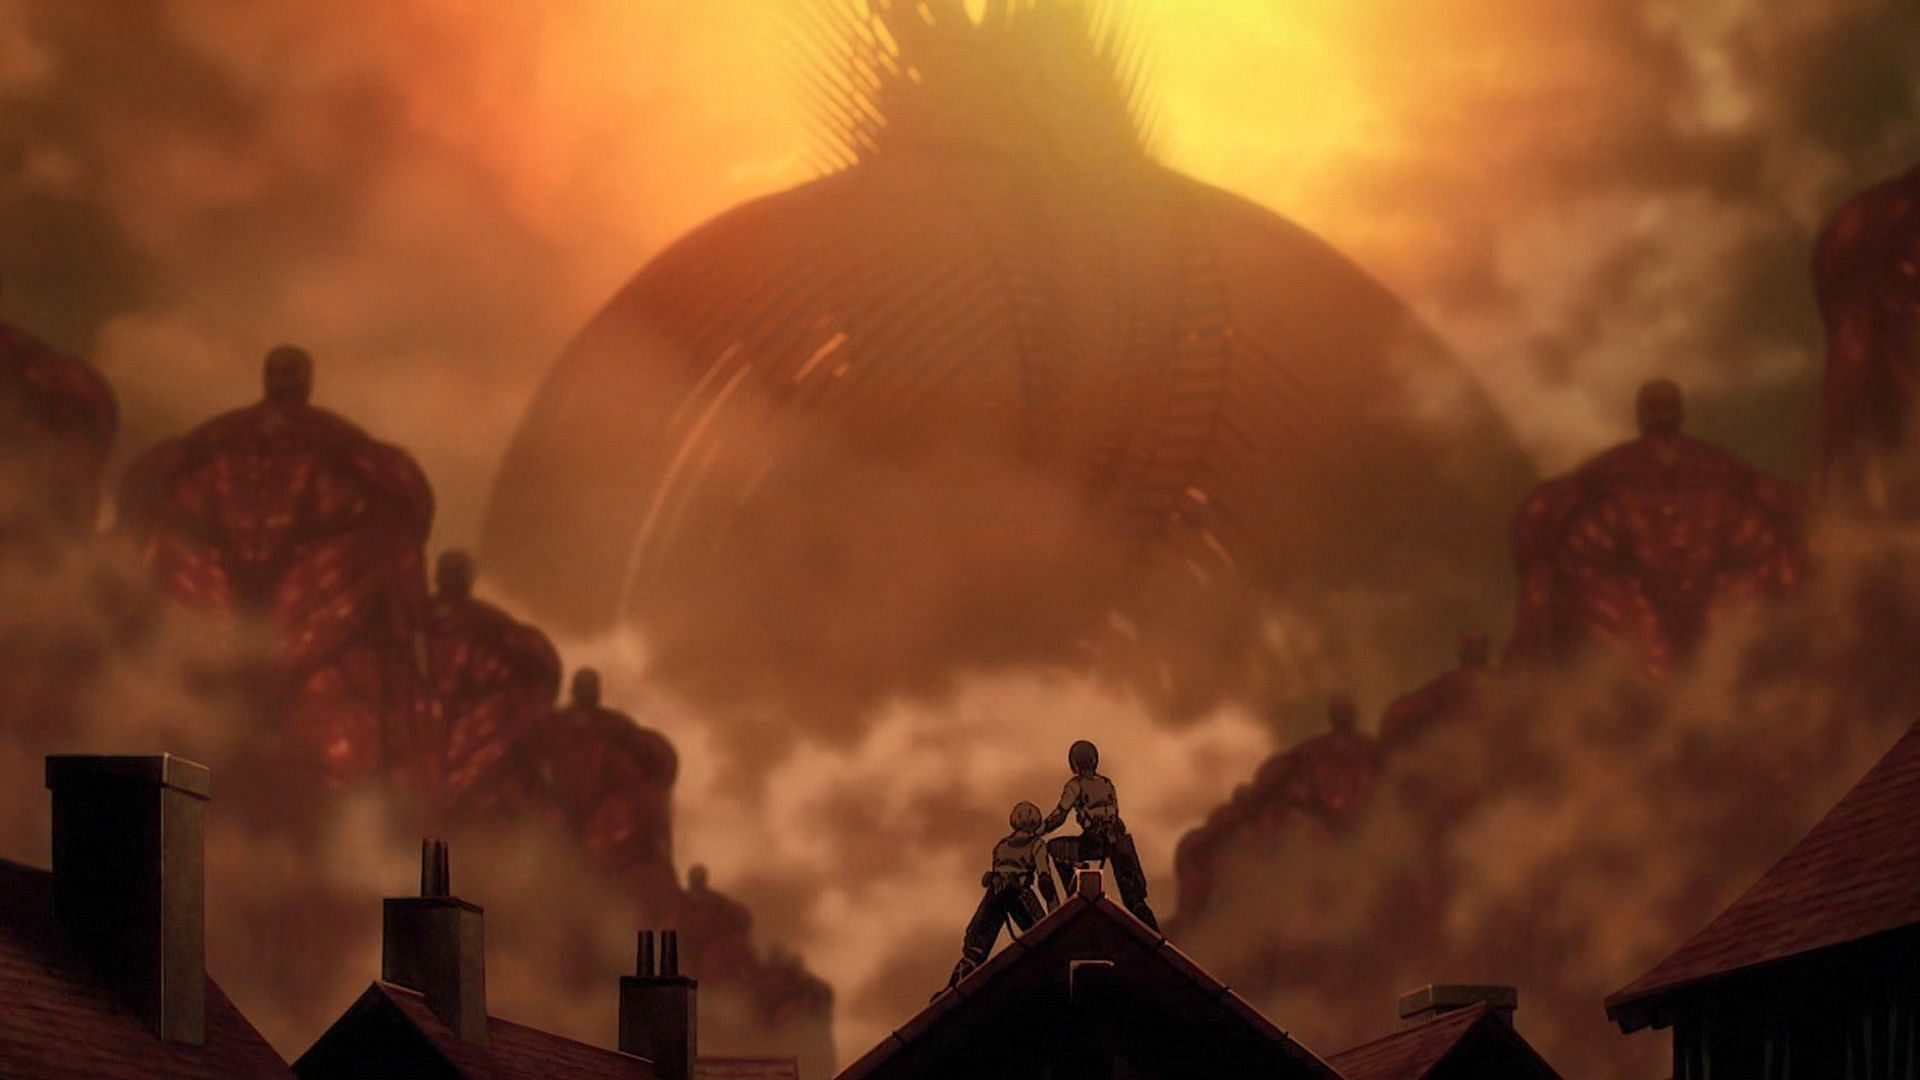 Attack on Titan finale dominates the internet hours before international premiere (Image via MAPPA Studios)